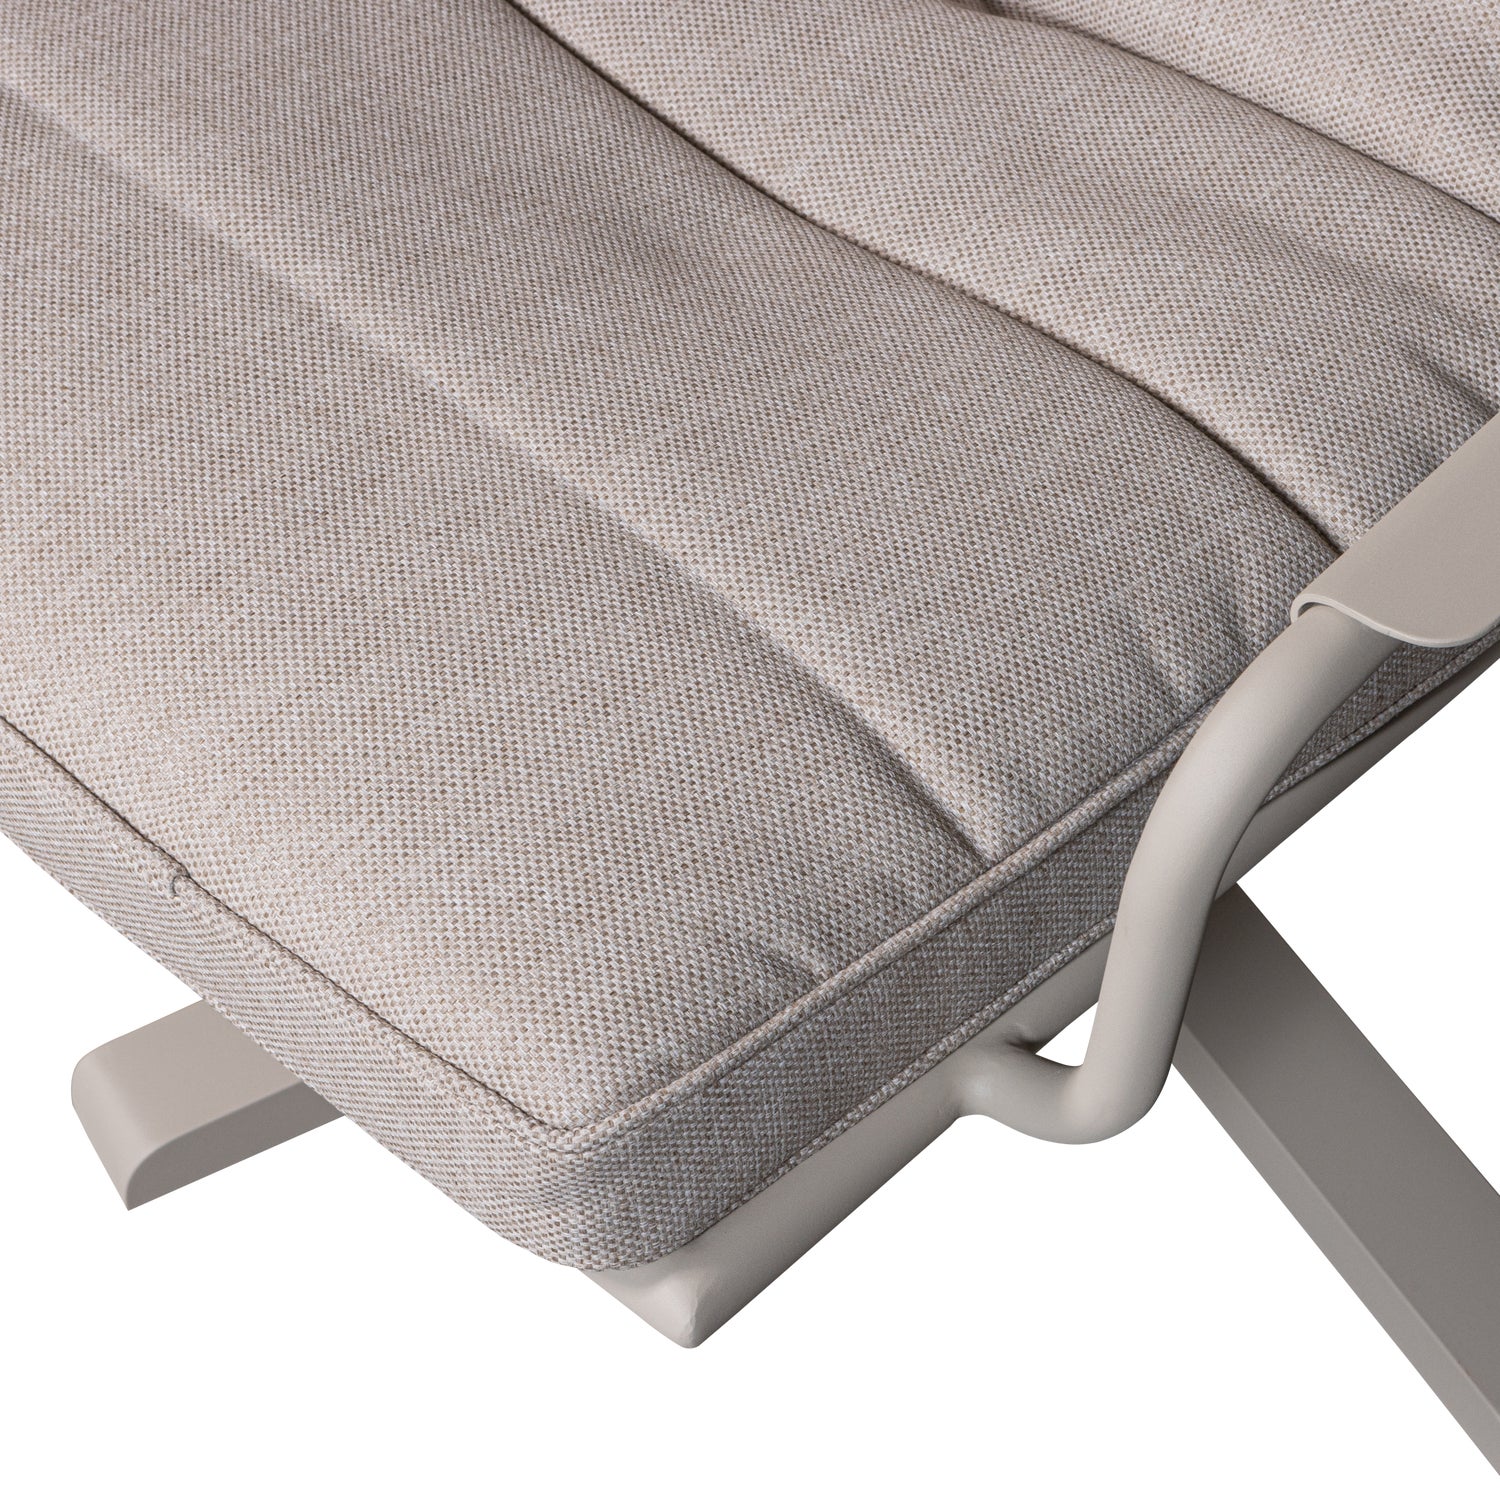 500009-Z-02_VS_EXT_Coosa_fauteuil_aluminium_zand_detail.png?auto=webp&format=png&width=1500&height=1500